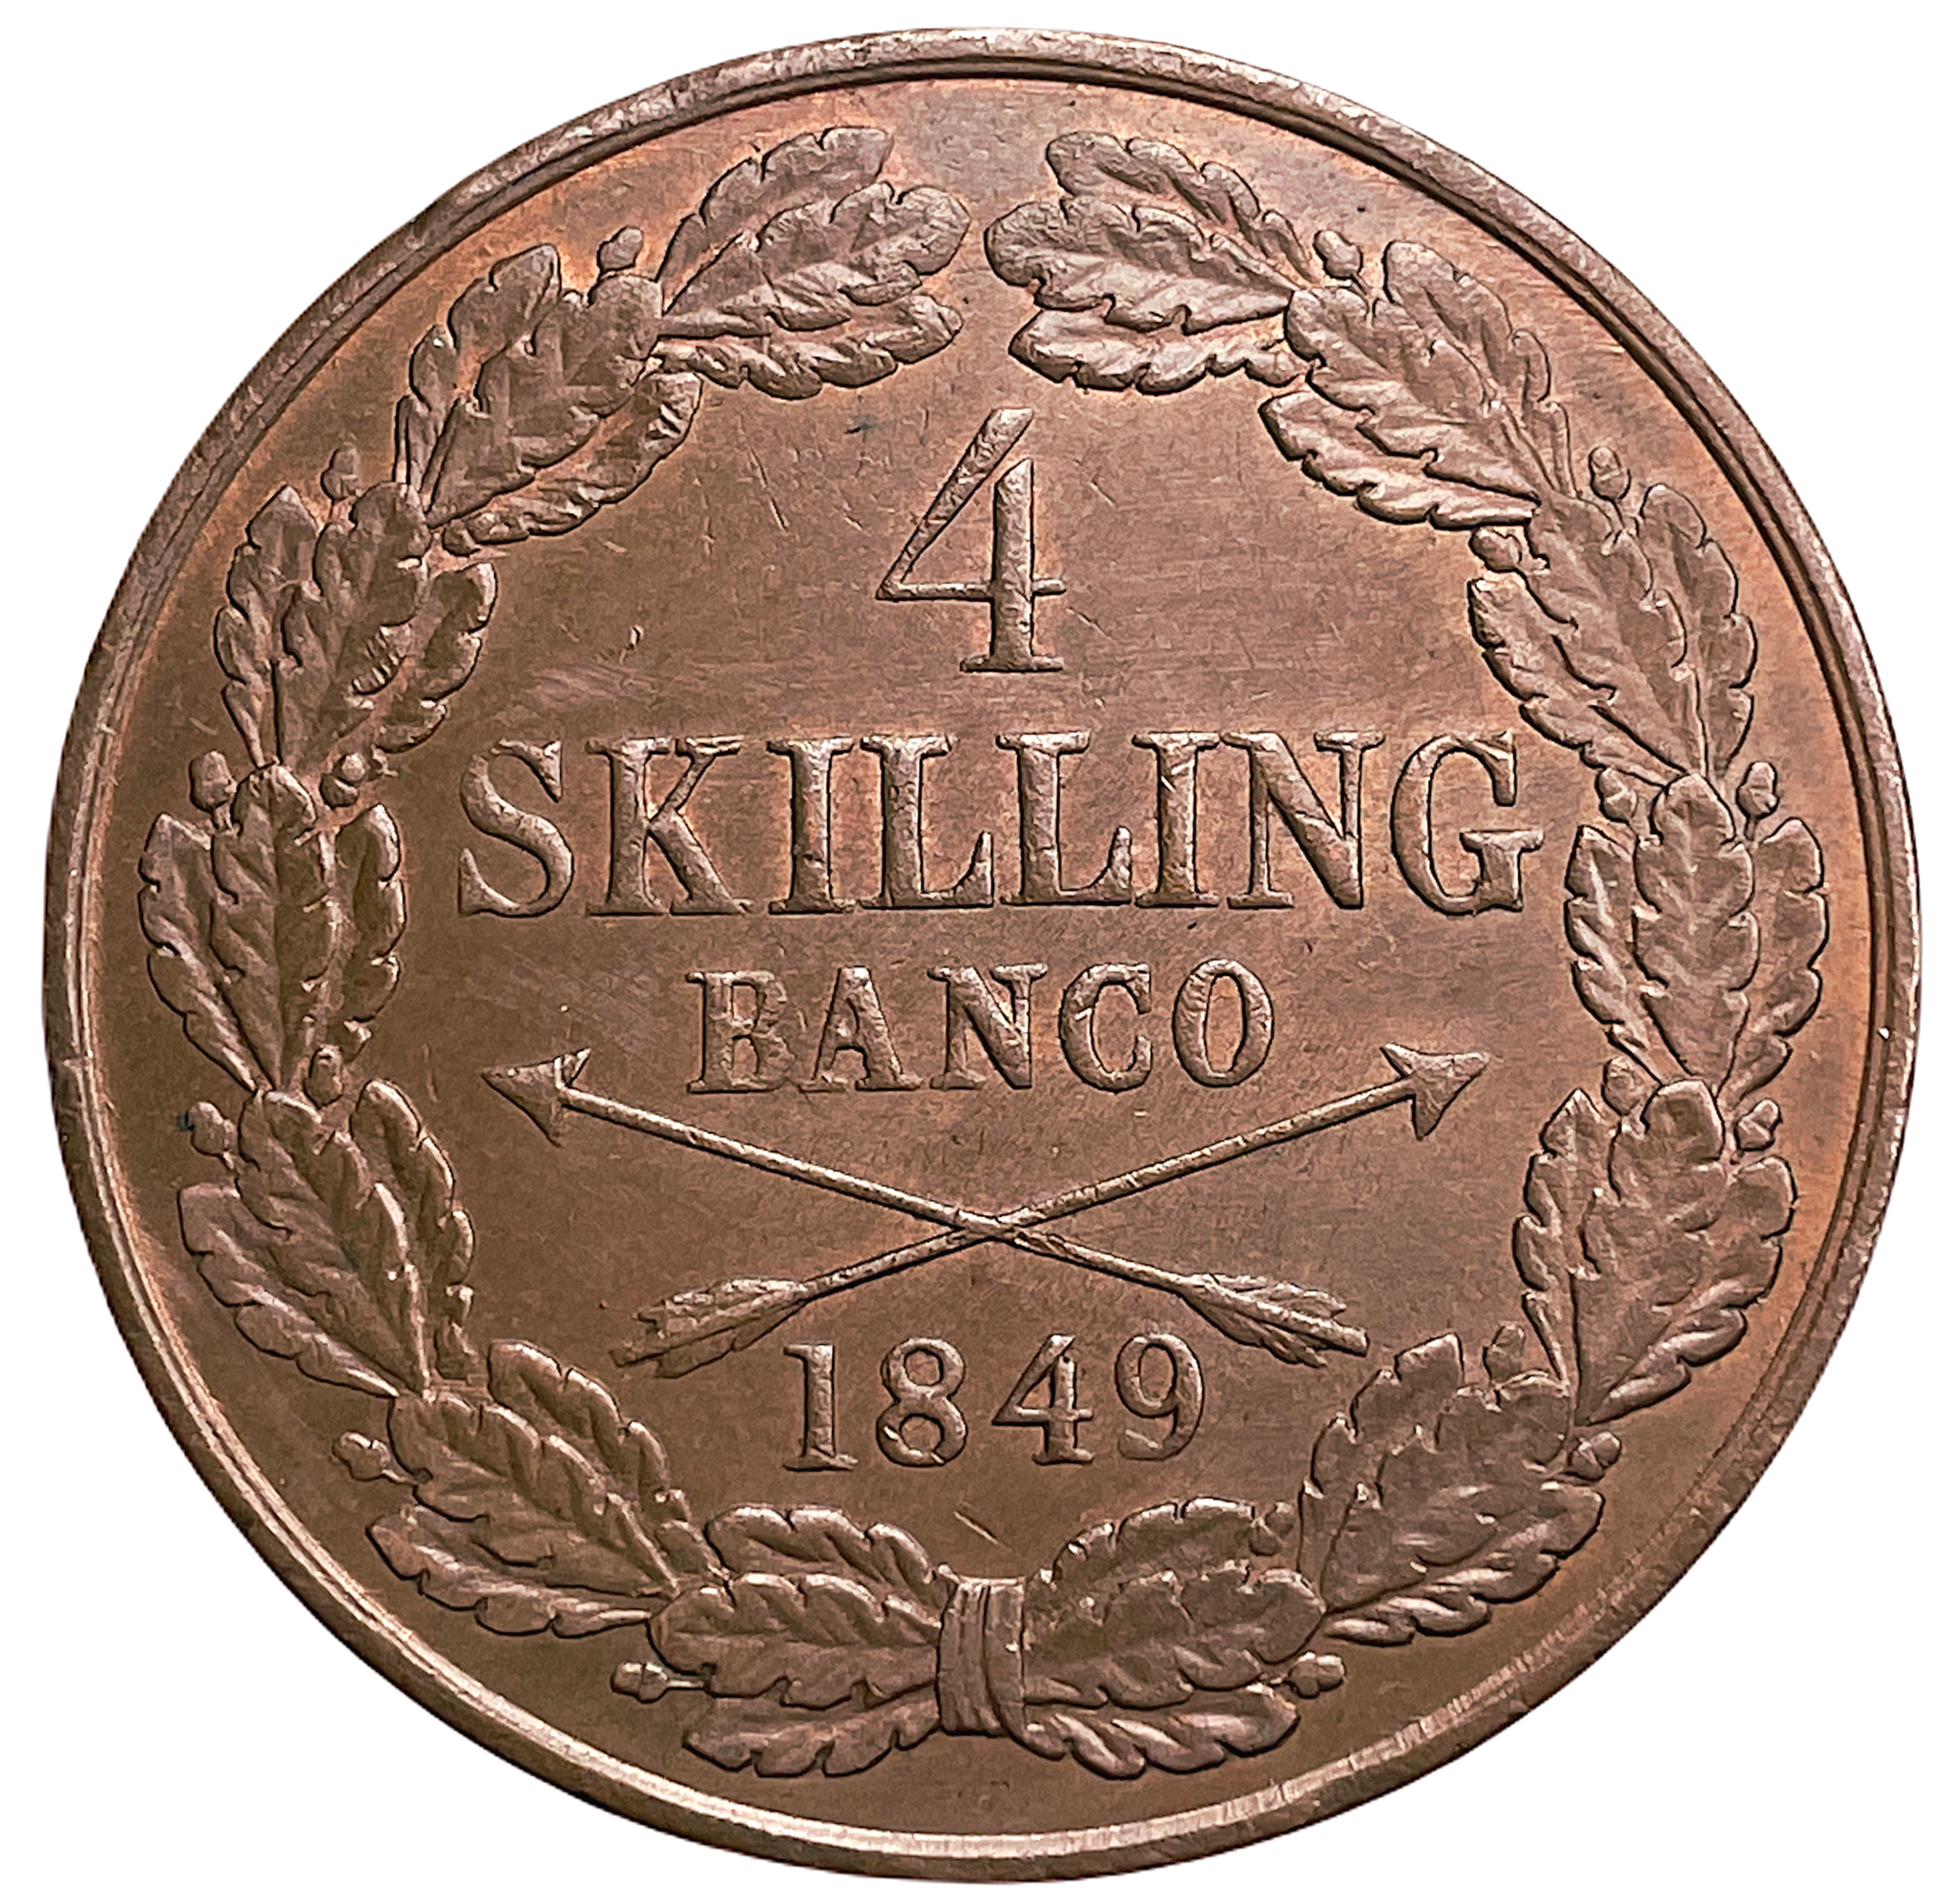 Oskar I - 4 Skilling Banco 1849 - Vackert exemplar